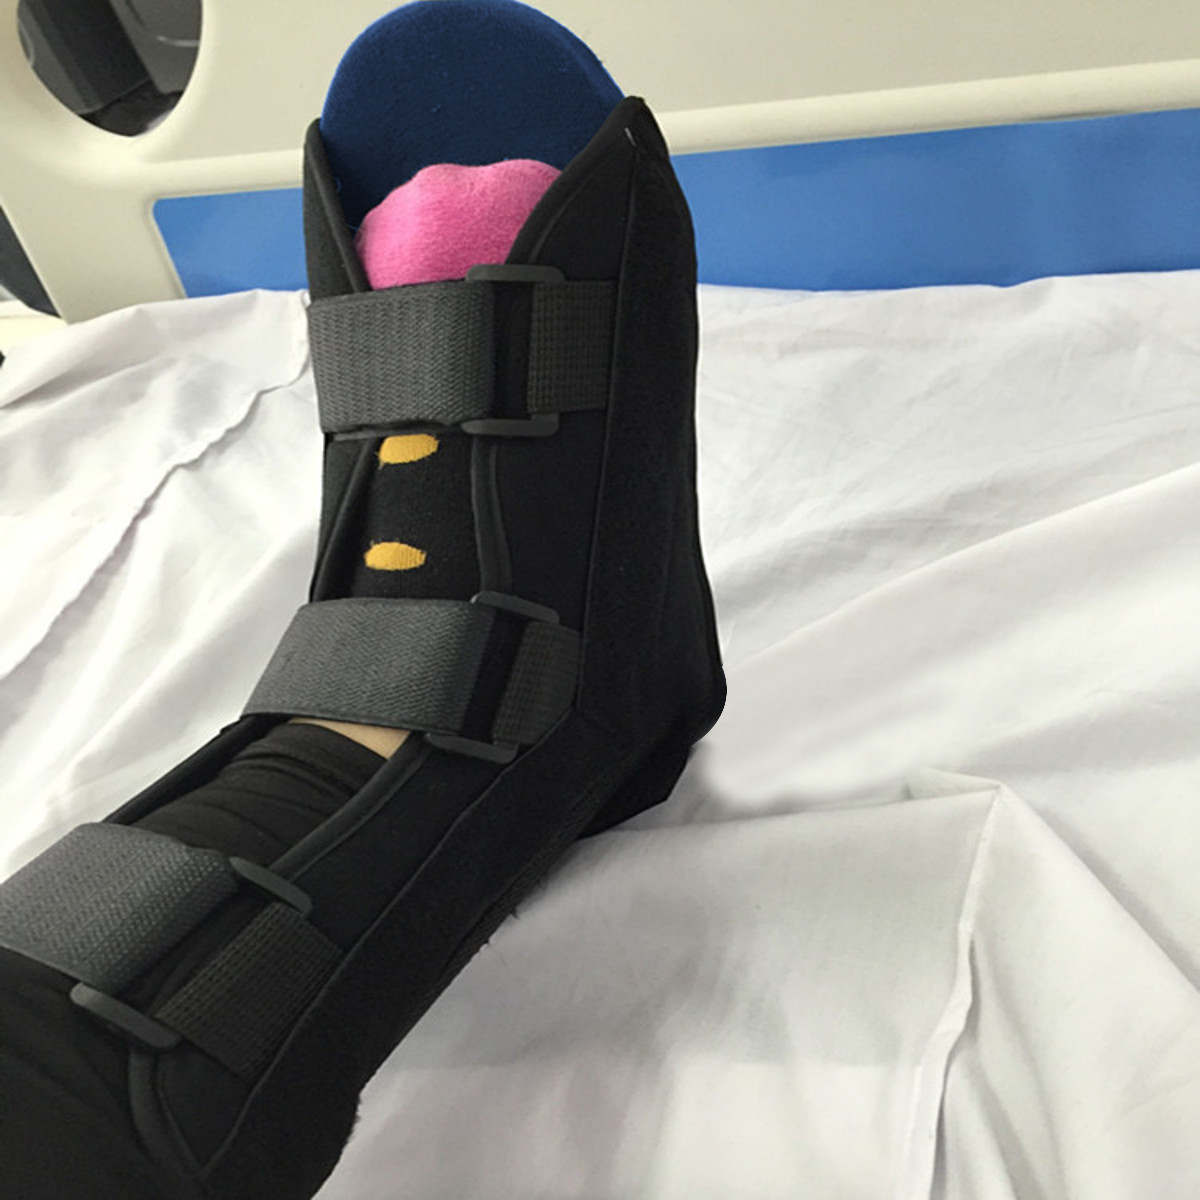 Medical Ankle Splint Boot Brace Support Tendinitis Plantar Fasciitis Heel Foot Splint For Child Kids